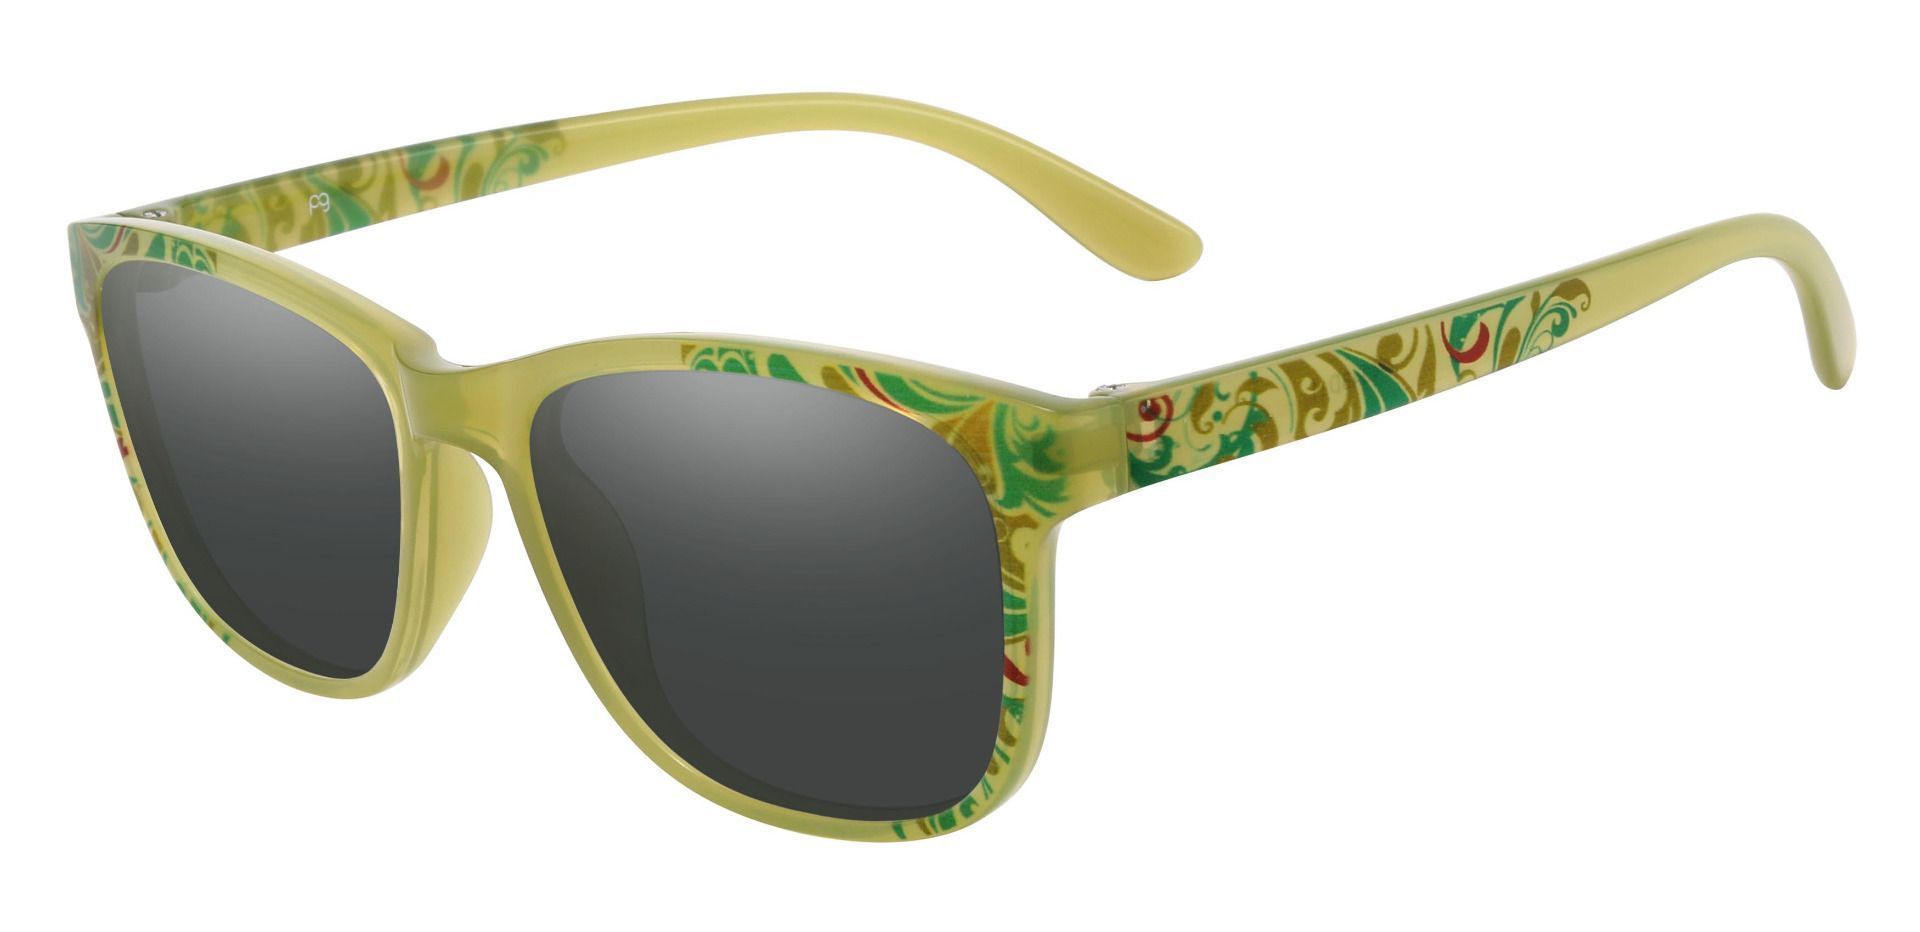 Juliet Square Prescription Sunglasses - Green Frame With Gray Lenses